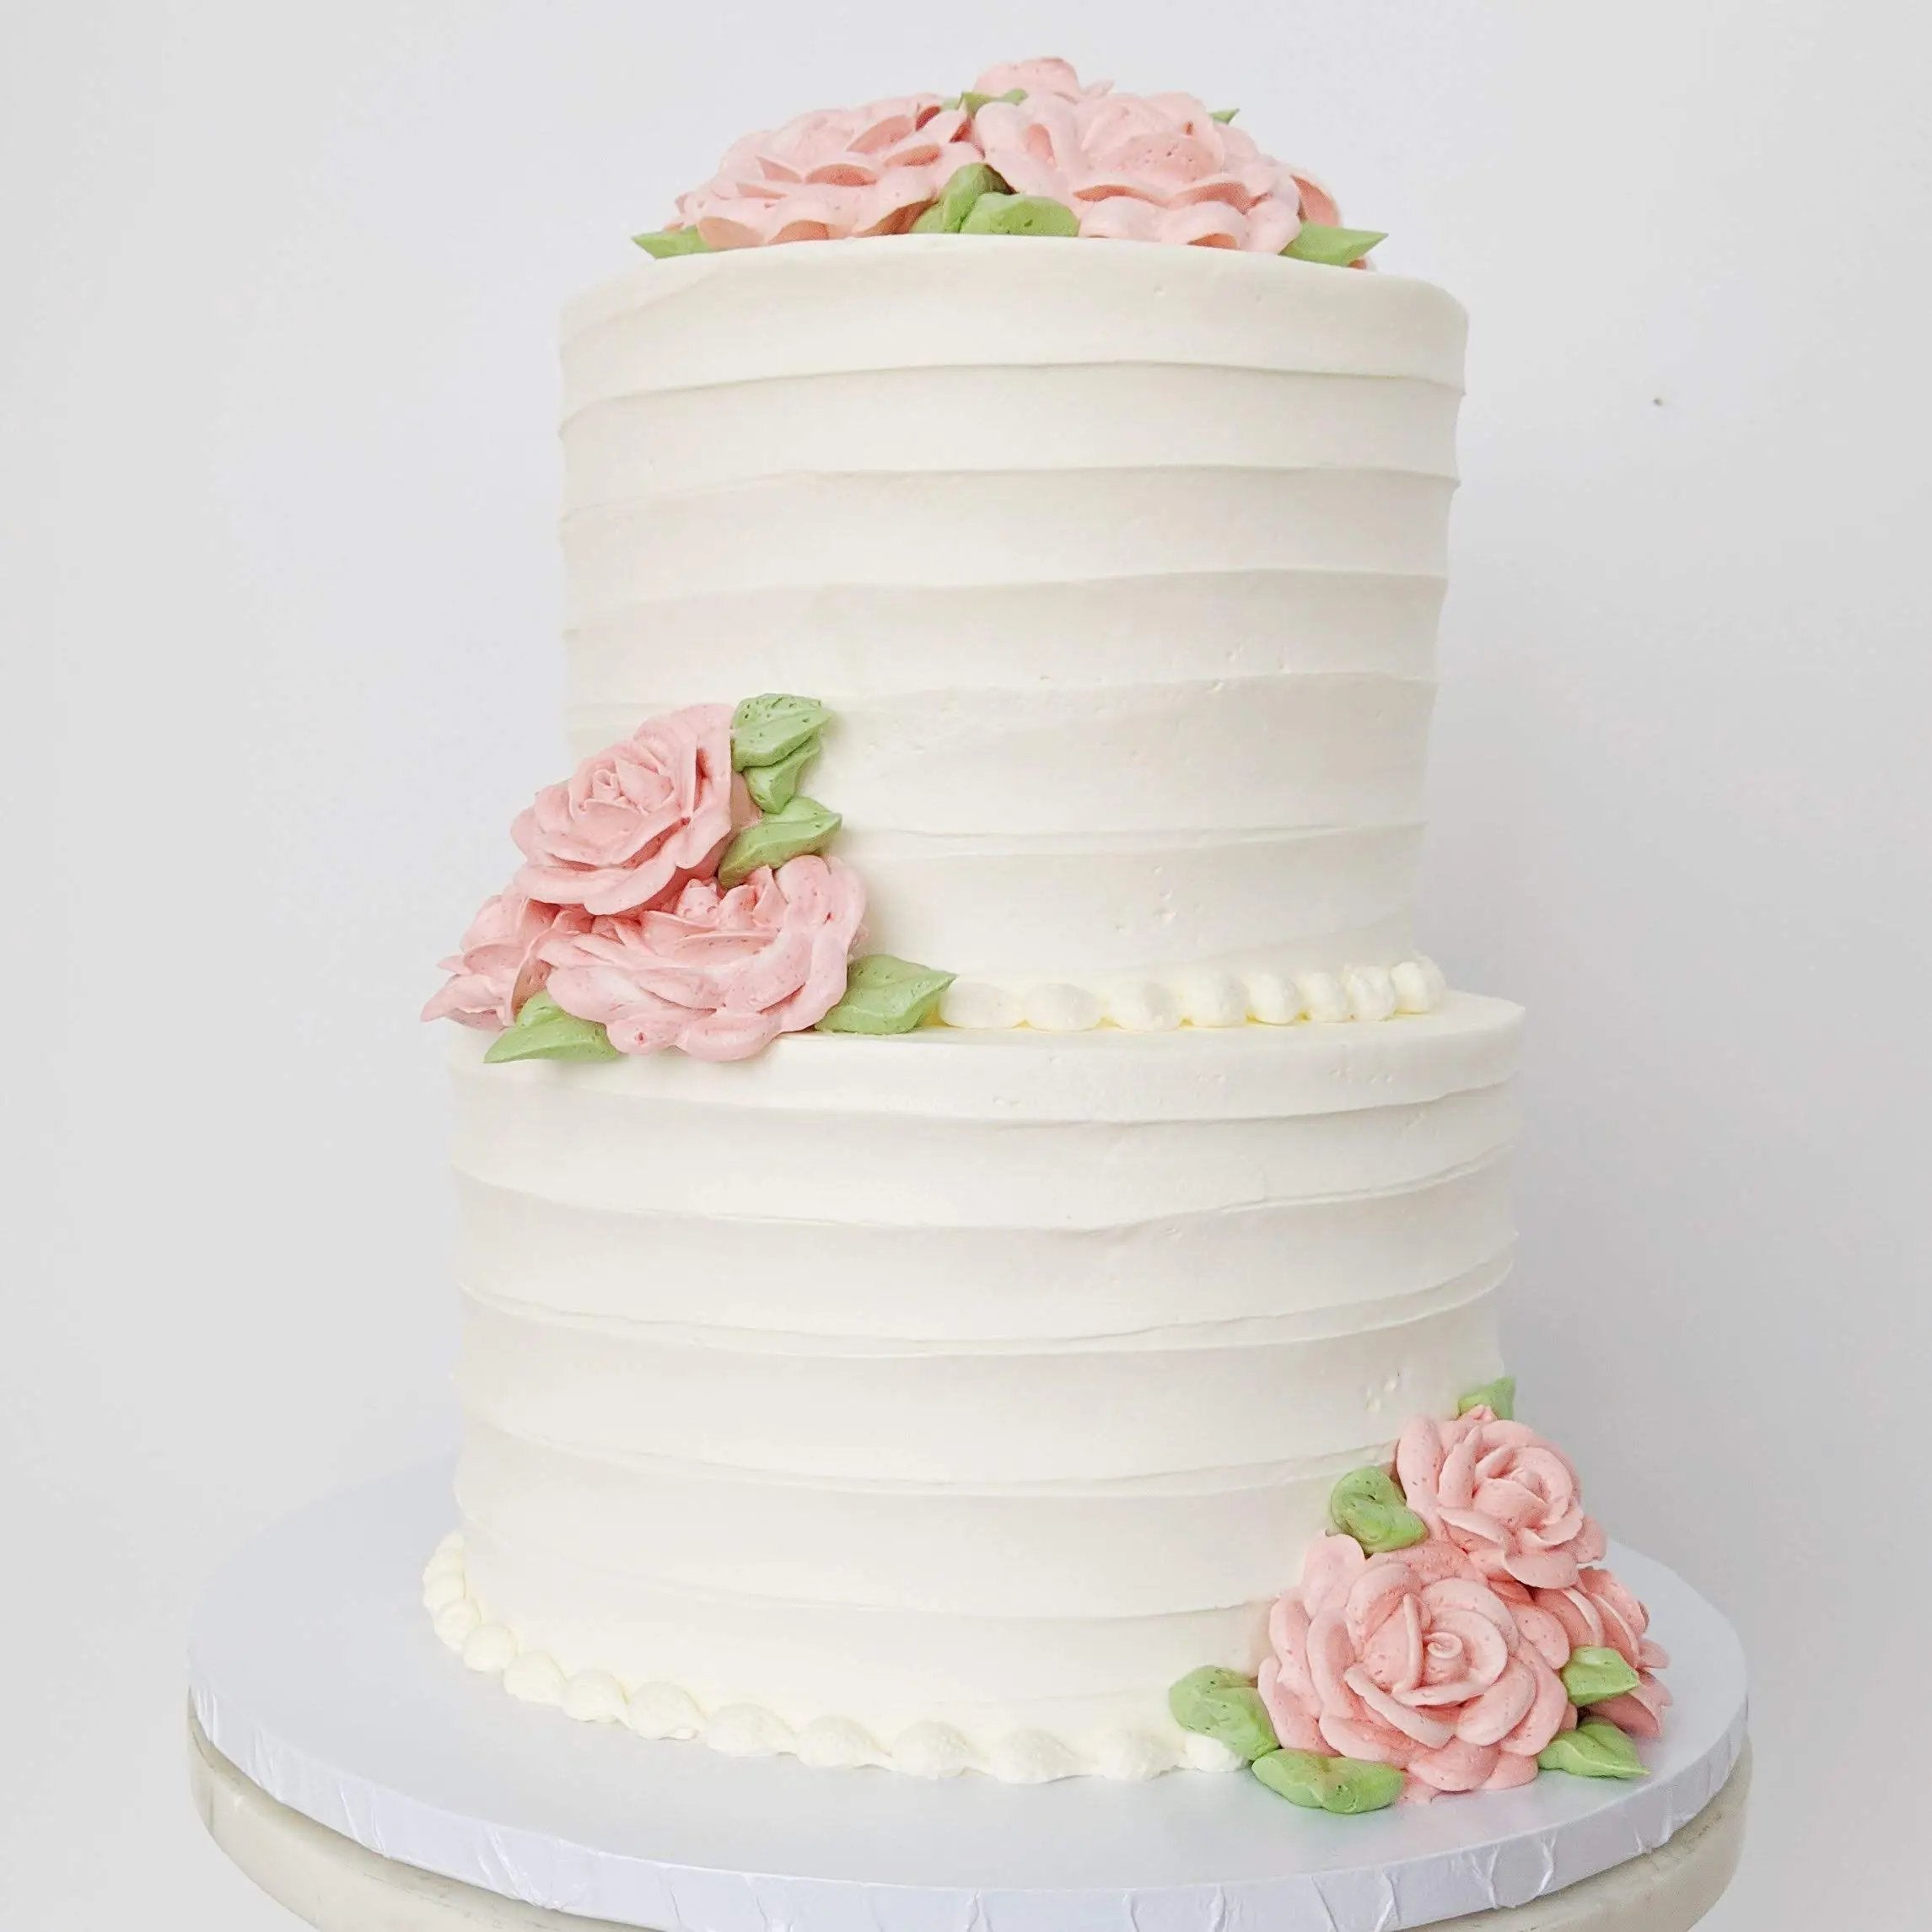 Two-tier Wedding Cake - Celebrity Cake Studio